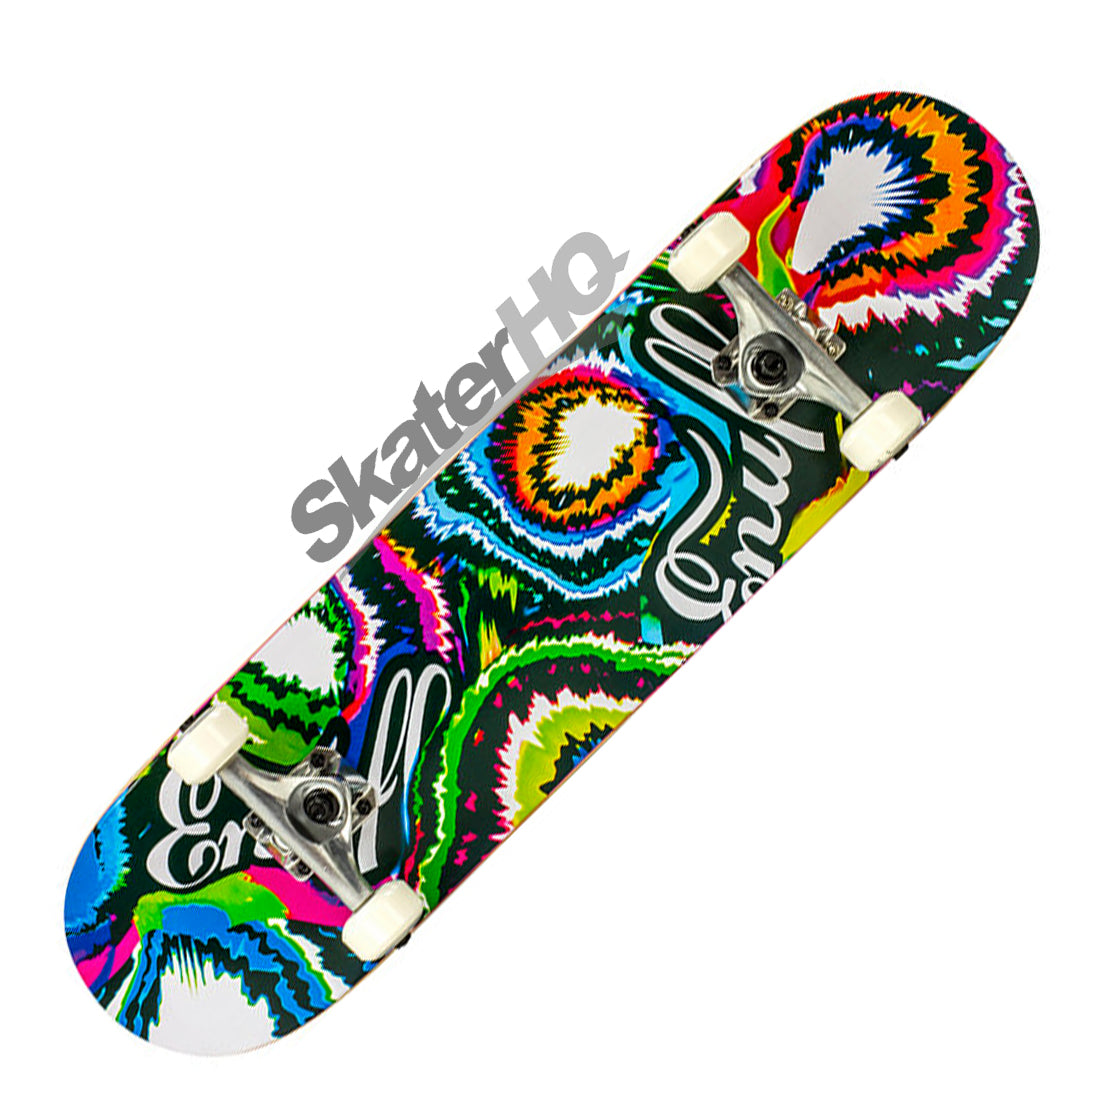 Enuff Acid 7.75 Complete - Multicolour Skateboard Completes Modern Street